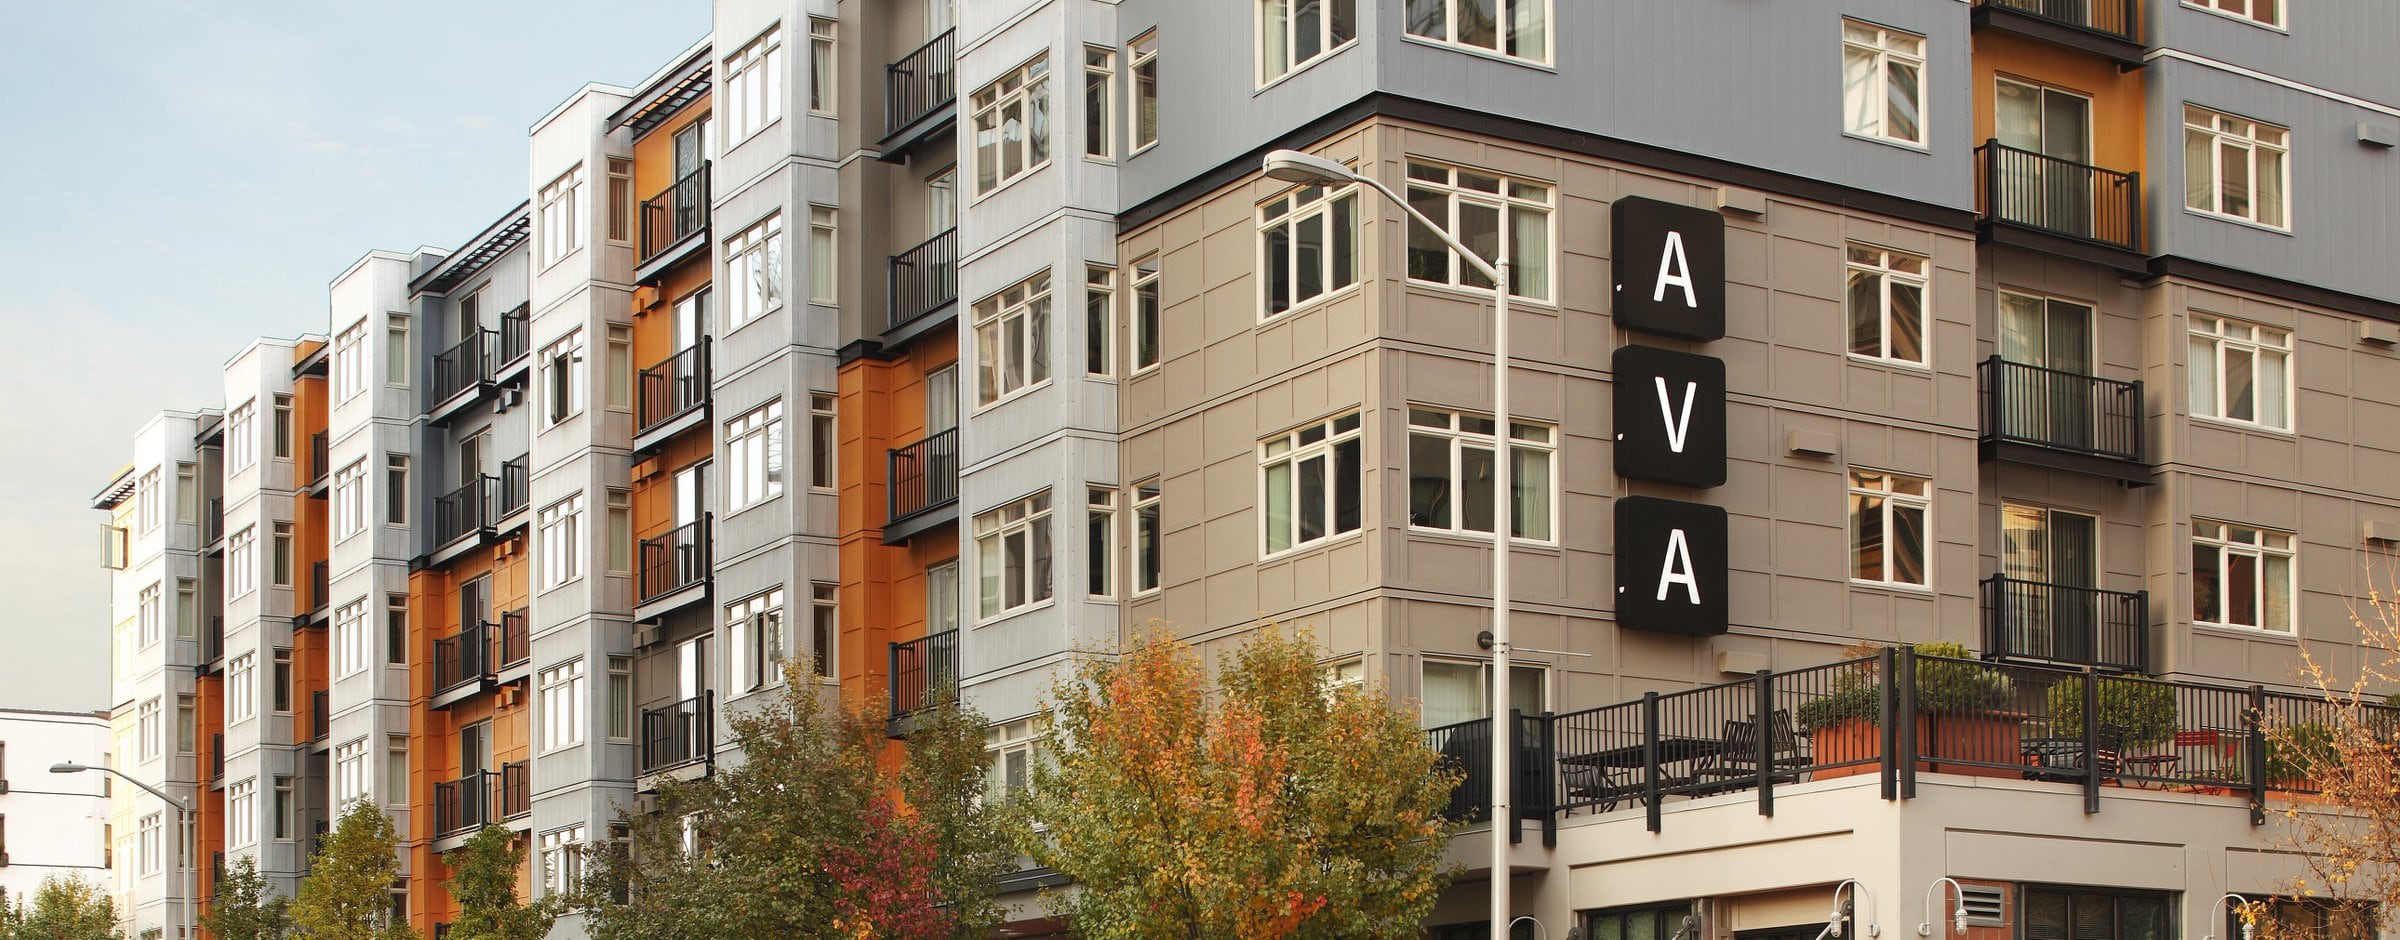 AVA Belltown - Apartments in Seattle, WA | AvalonBay Communities |  AvalonBay Communities